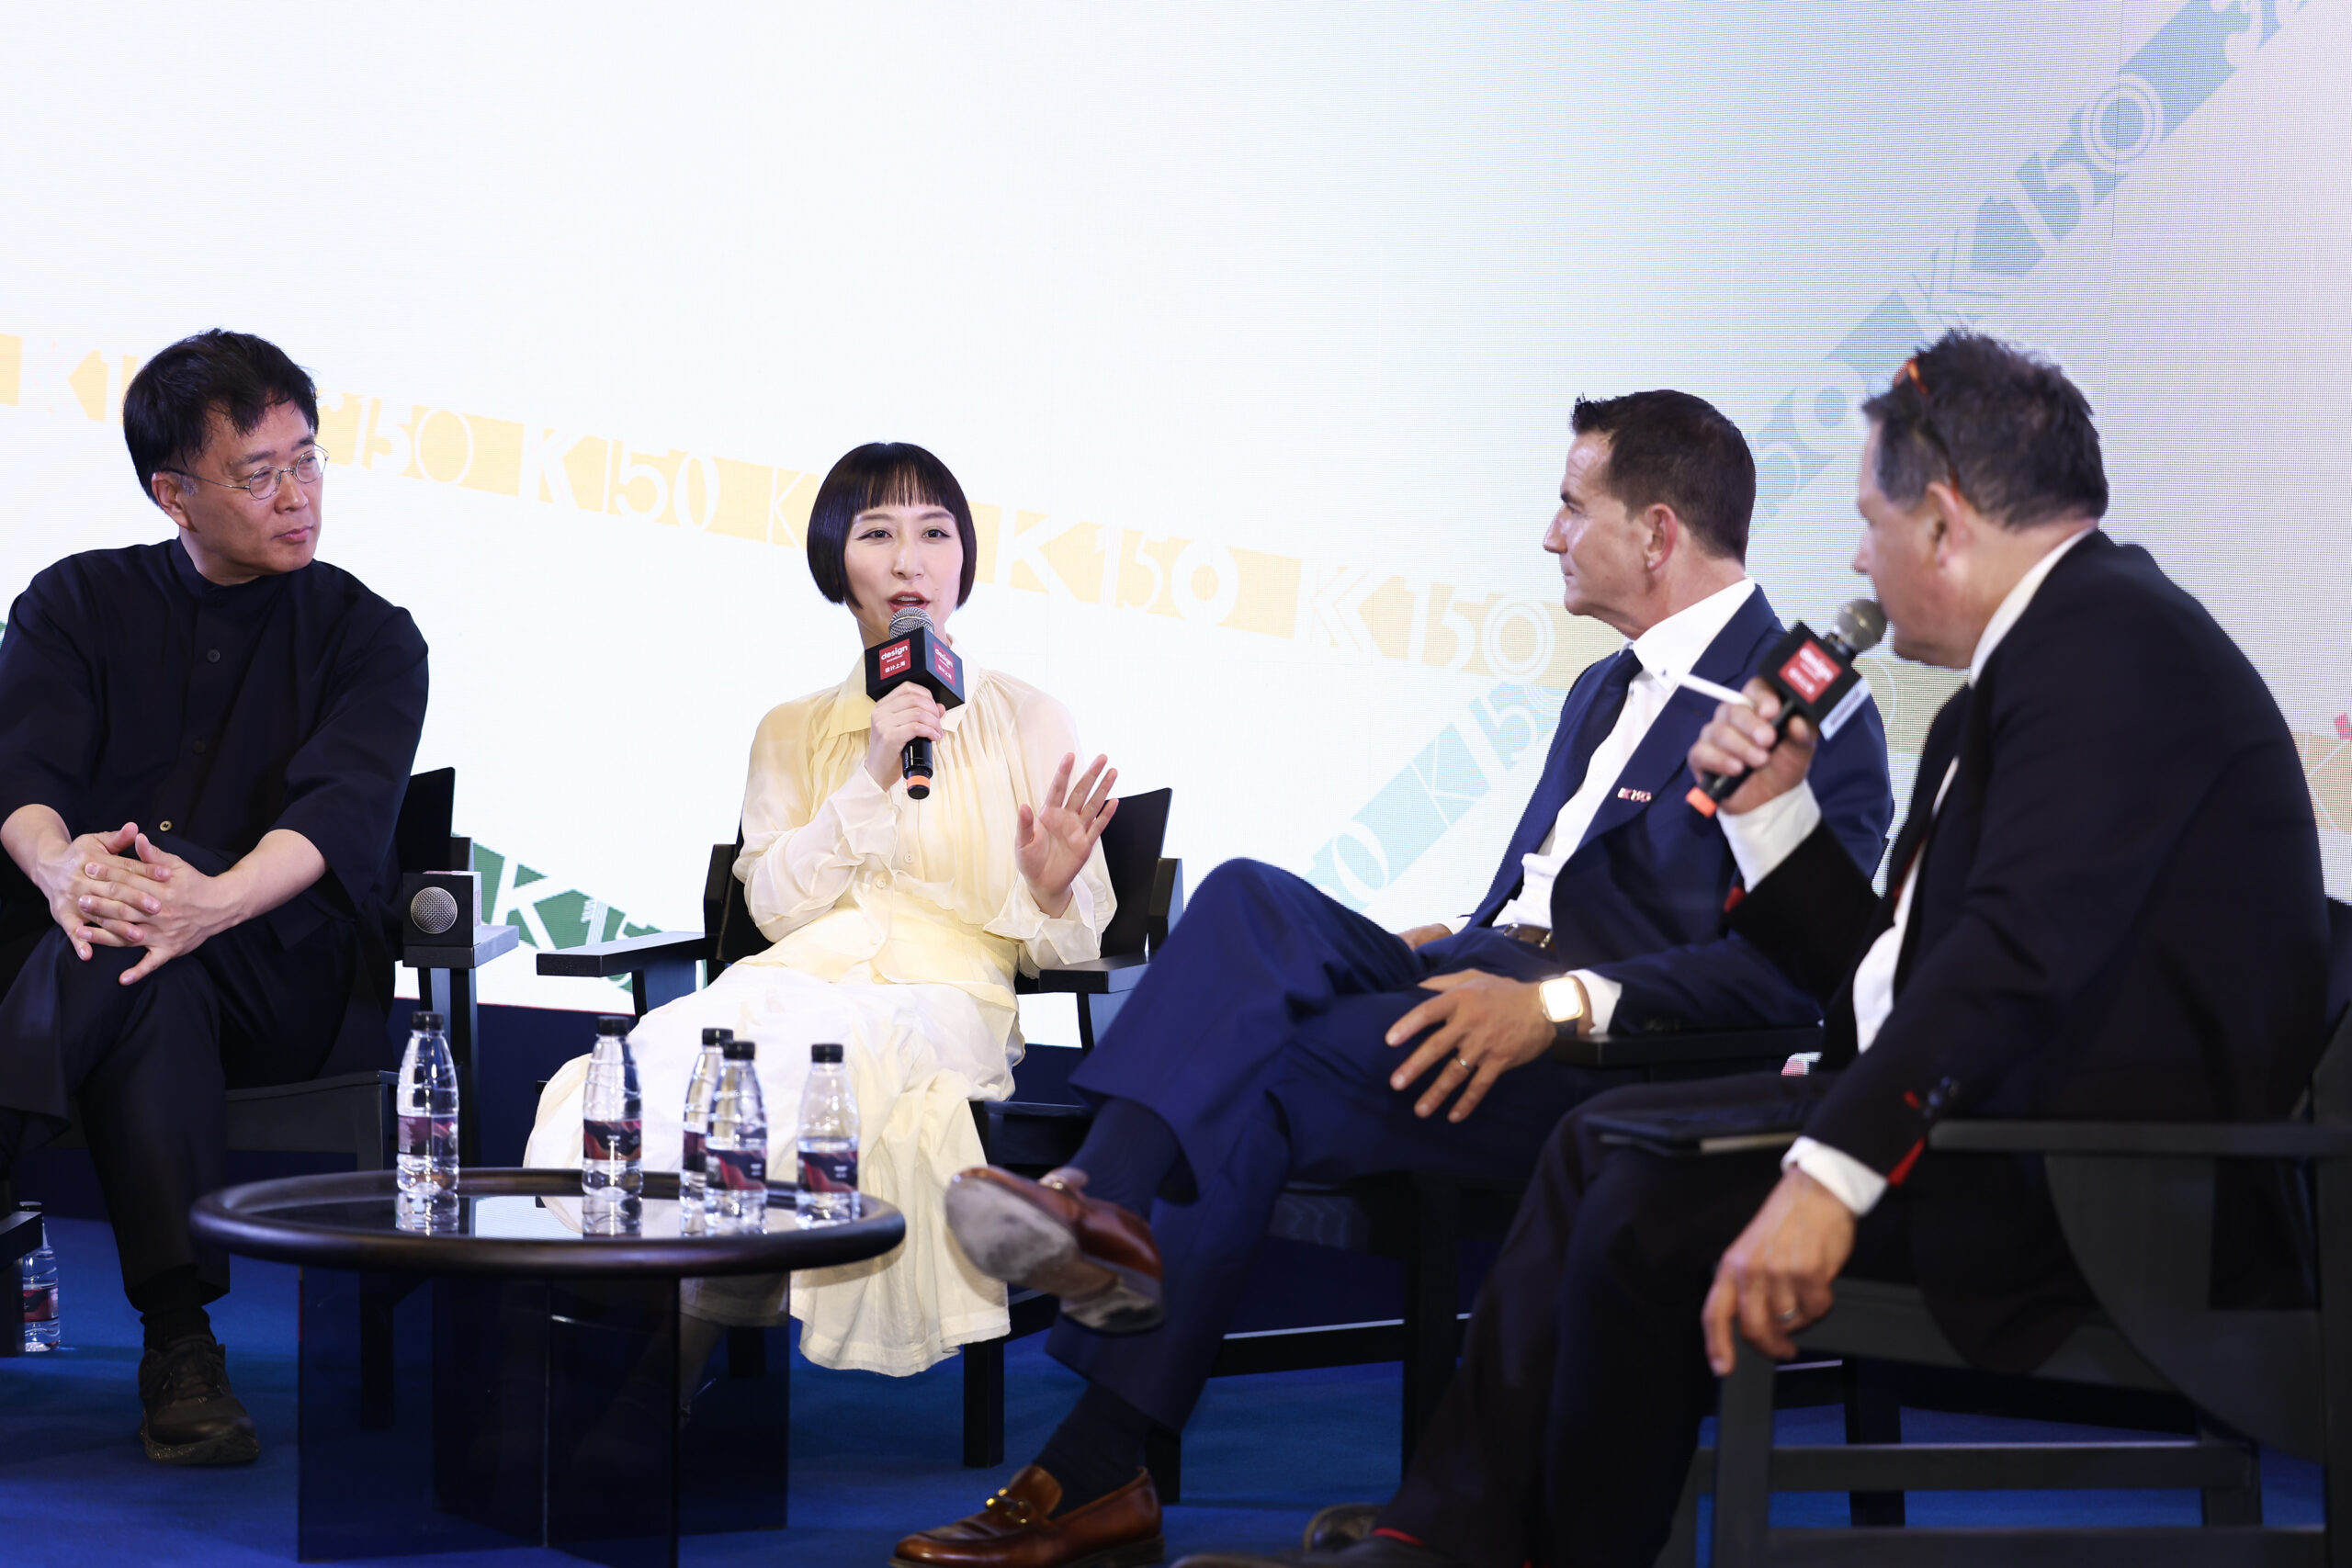 Ziling Wang at a panel event with CEO David Kohler, designer Tony Chi, and Satoshi Ohashi from Zaha Hadid at Design Shanghai 2023